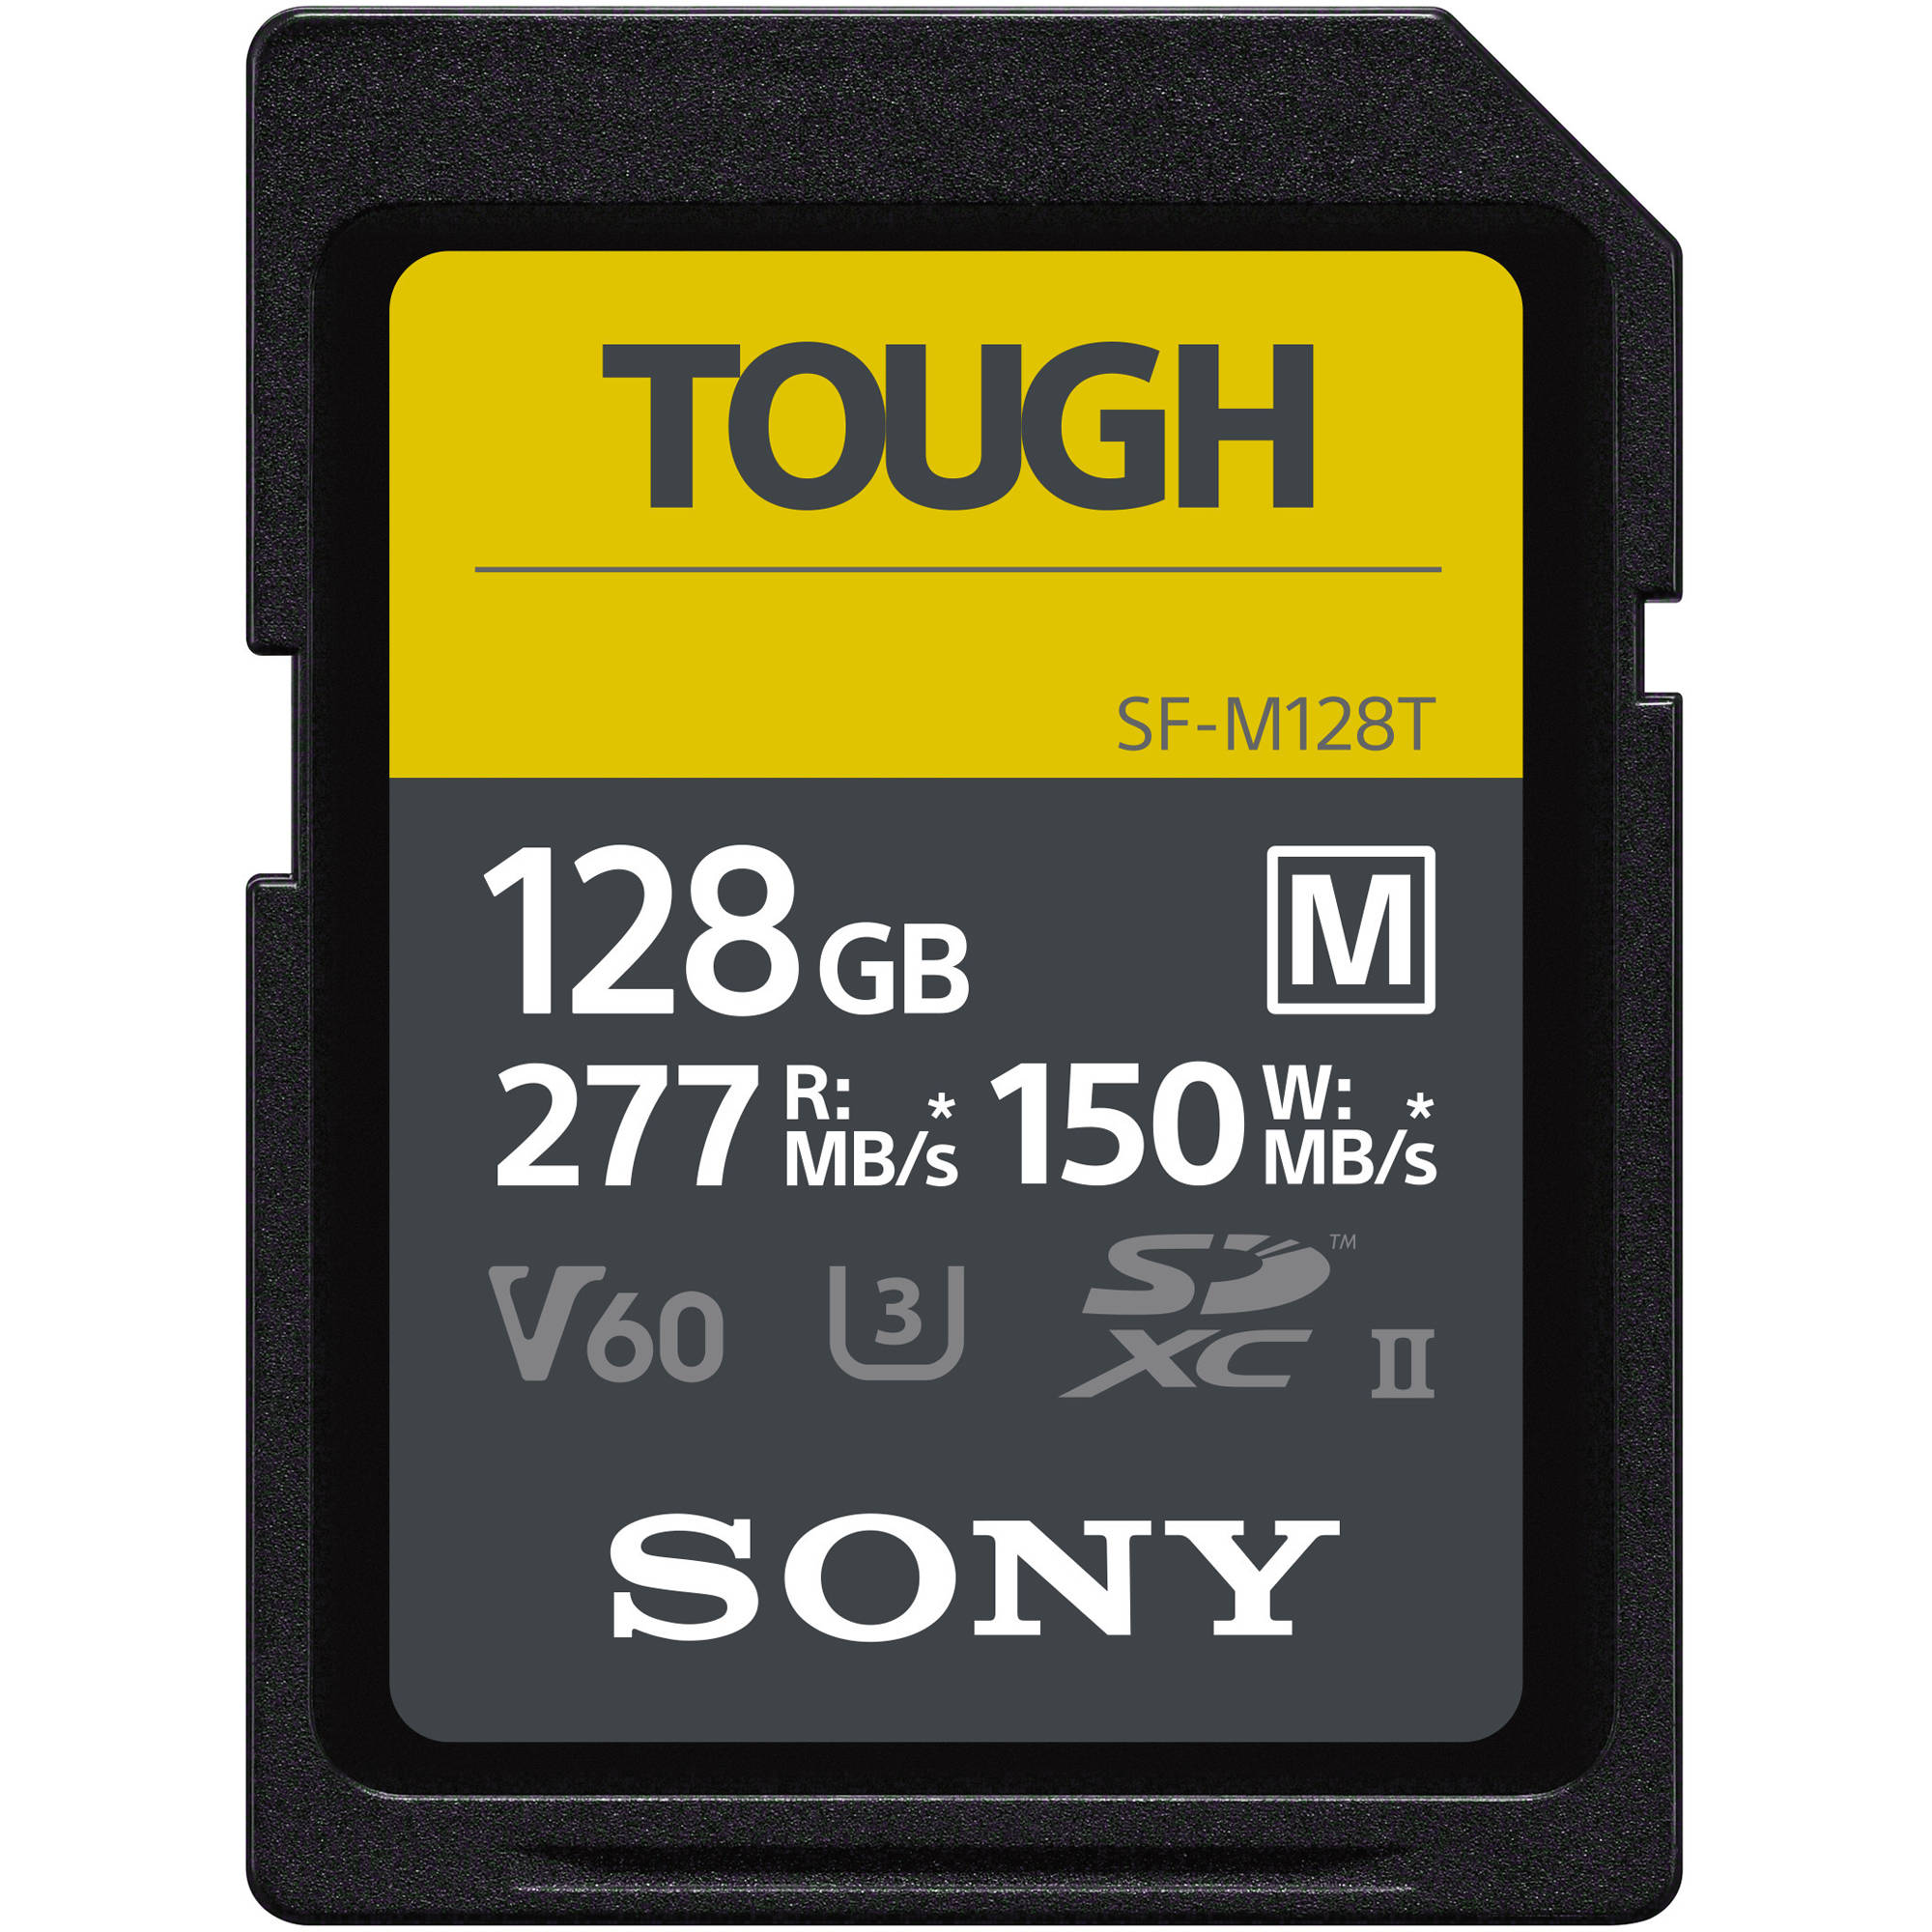 Sony SF-M TOUGH Series UHS-II SDXC Memory Card